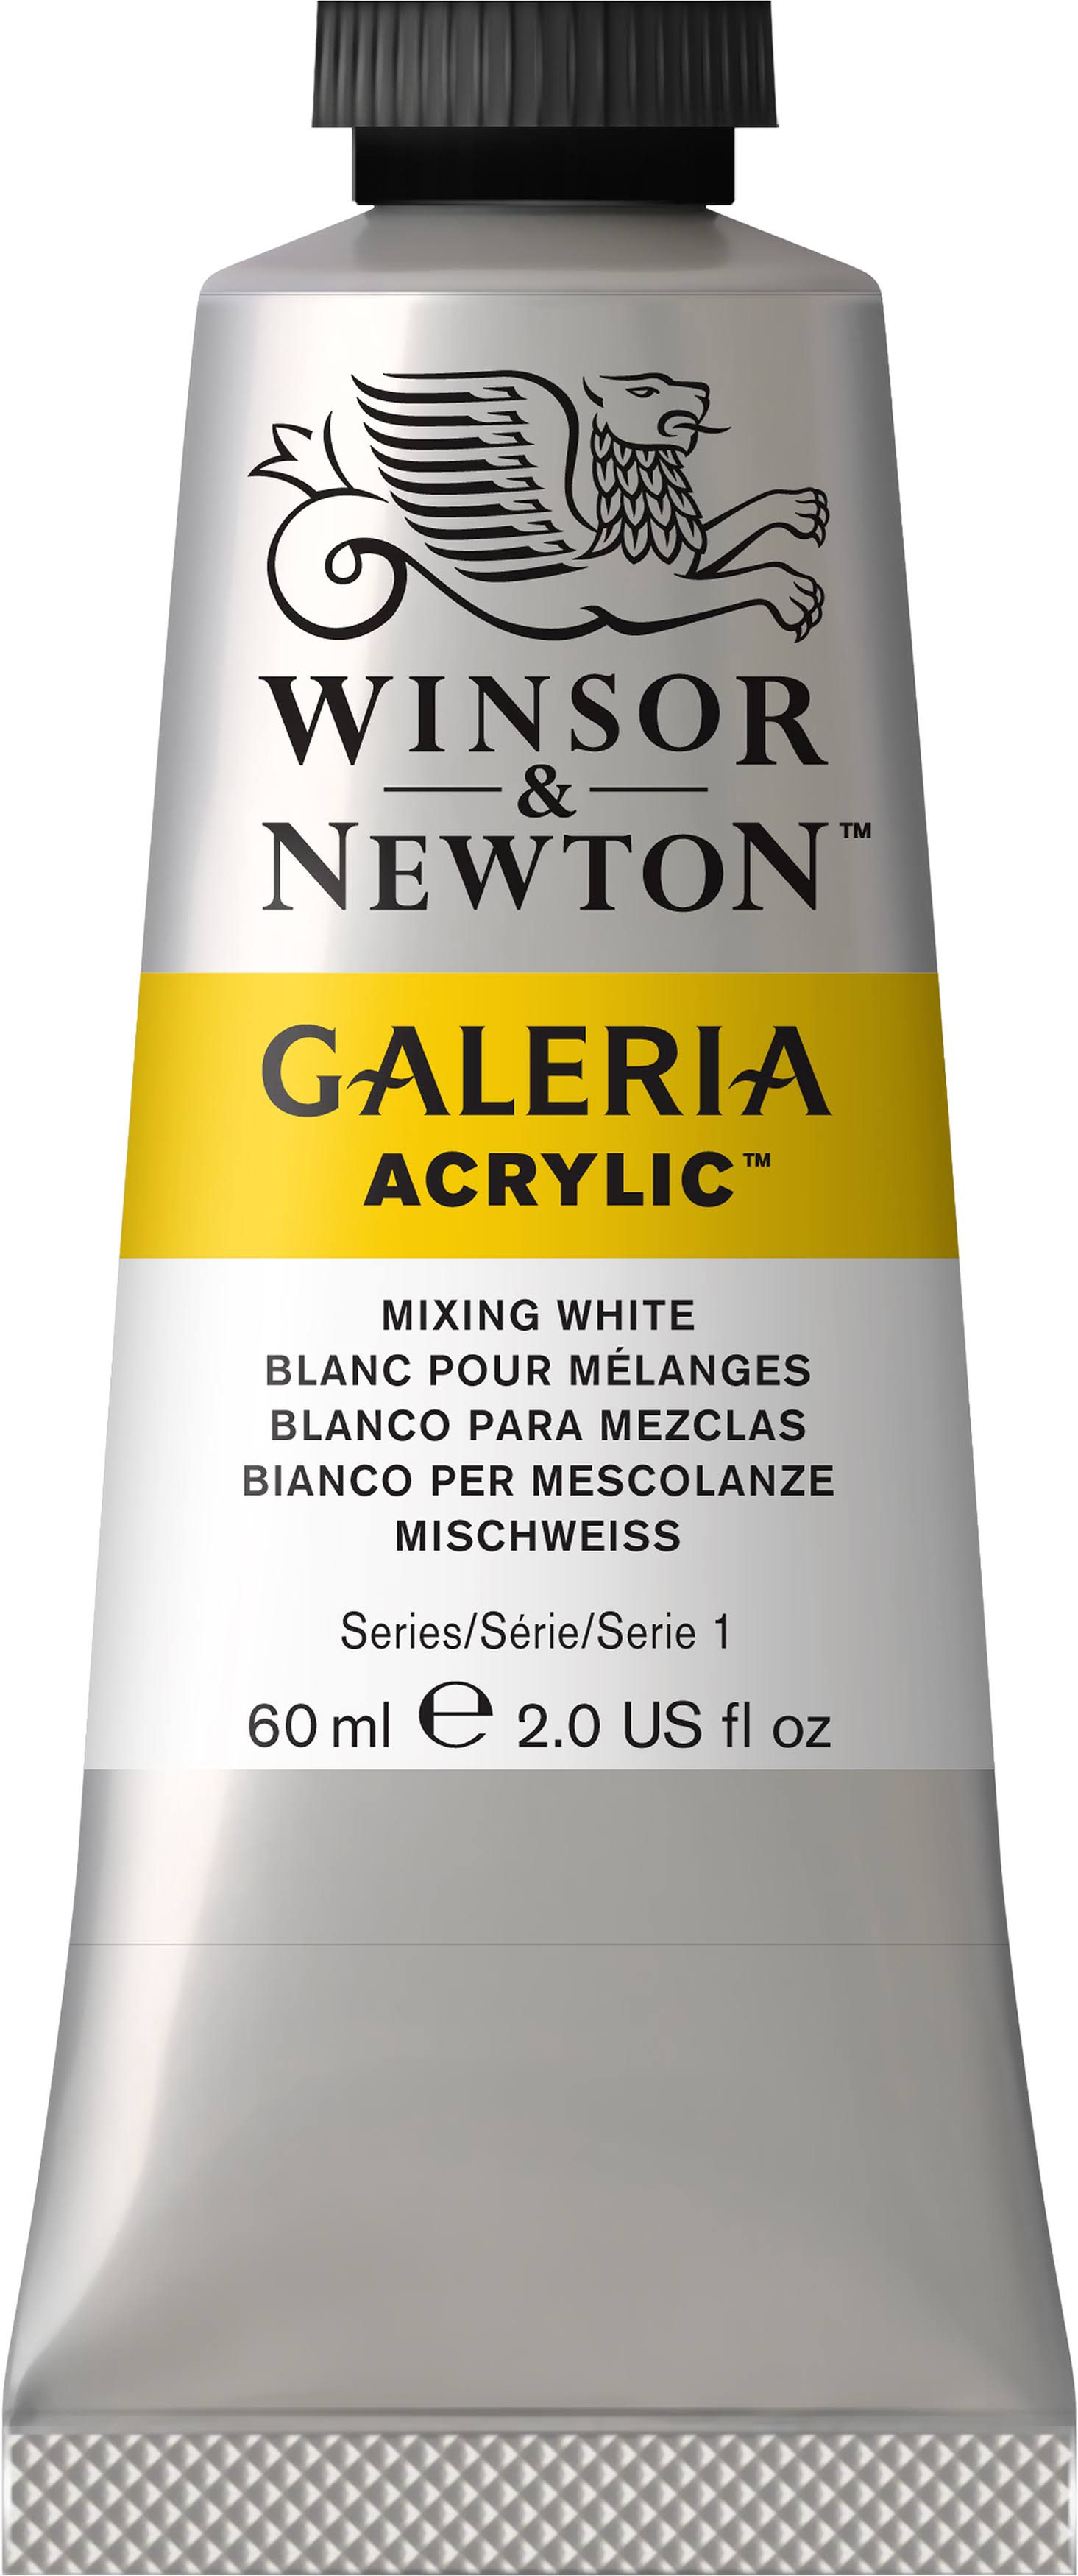 Winsor & Newton Galeria Acrylic - Mixing White, 60ml